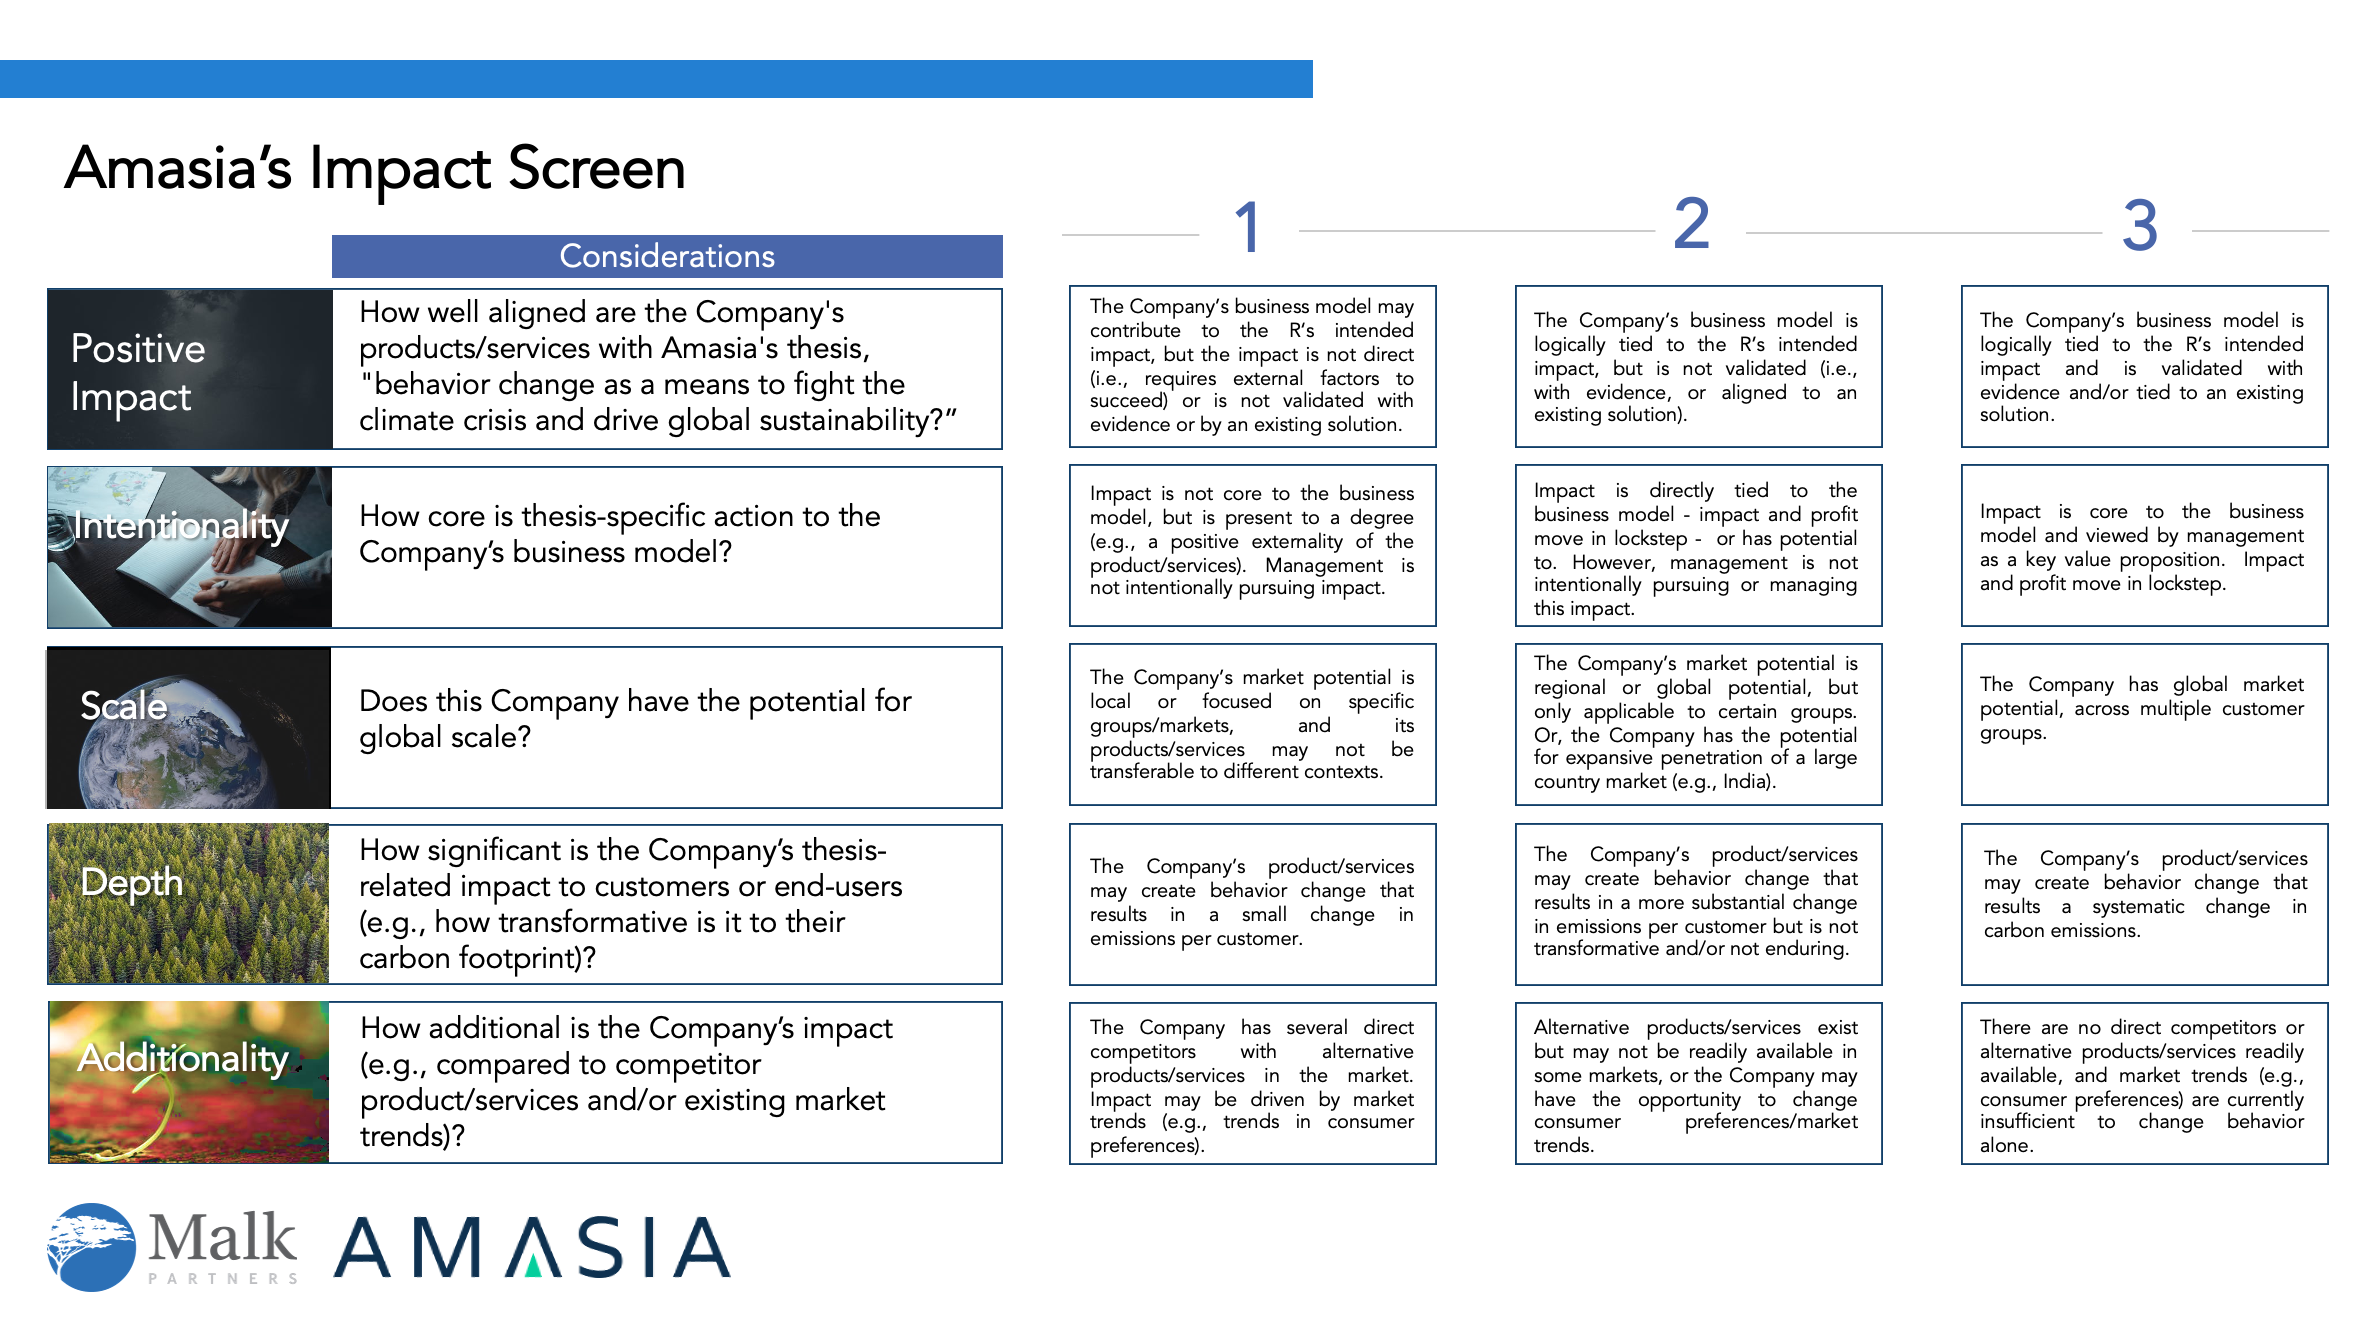 Figure 2: Amasia's Impact Screen